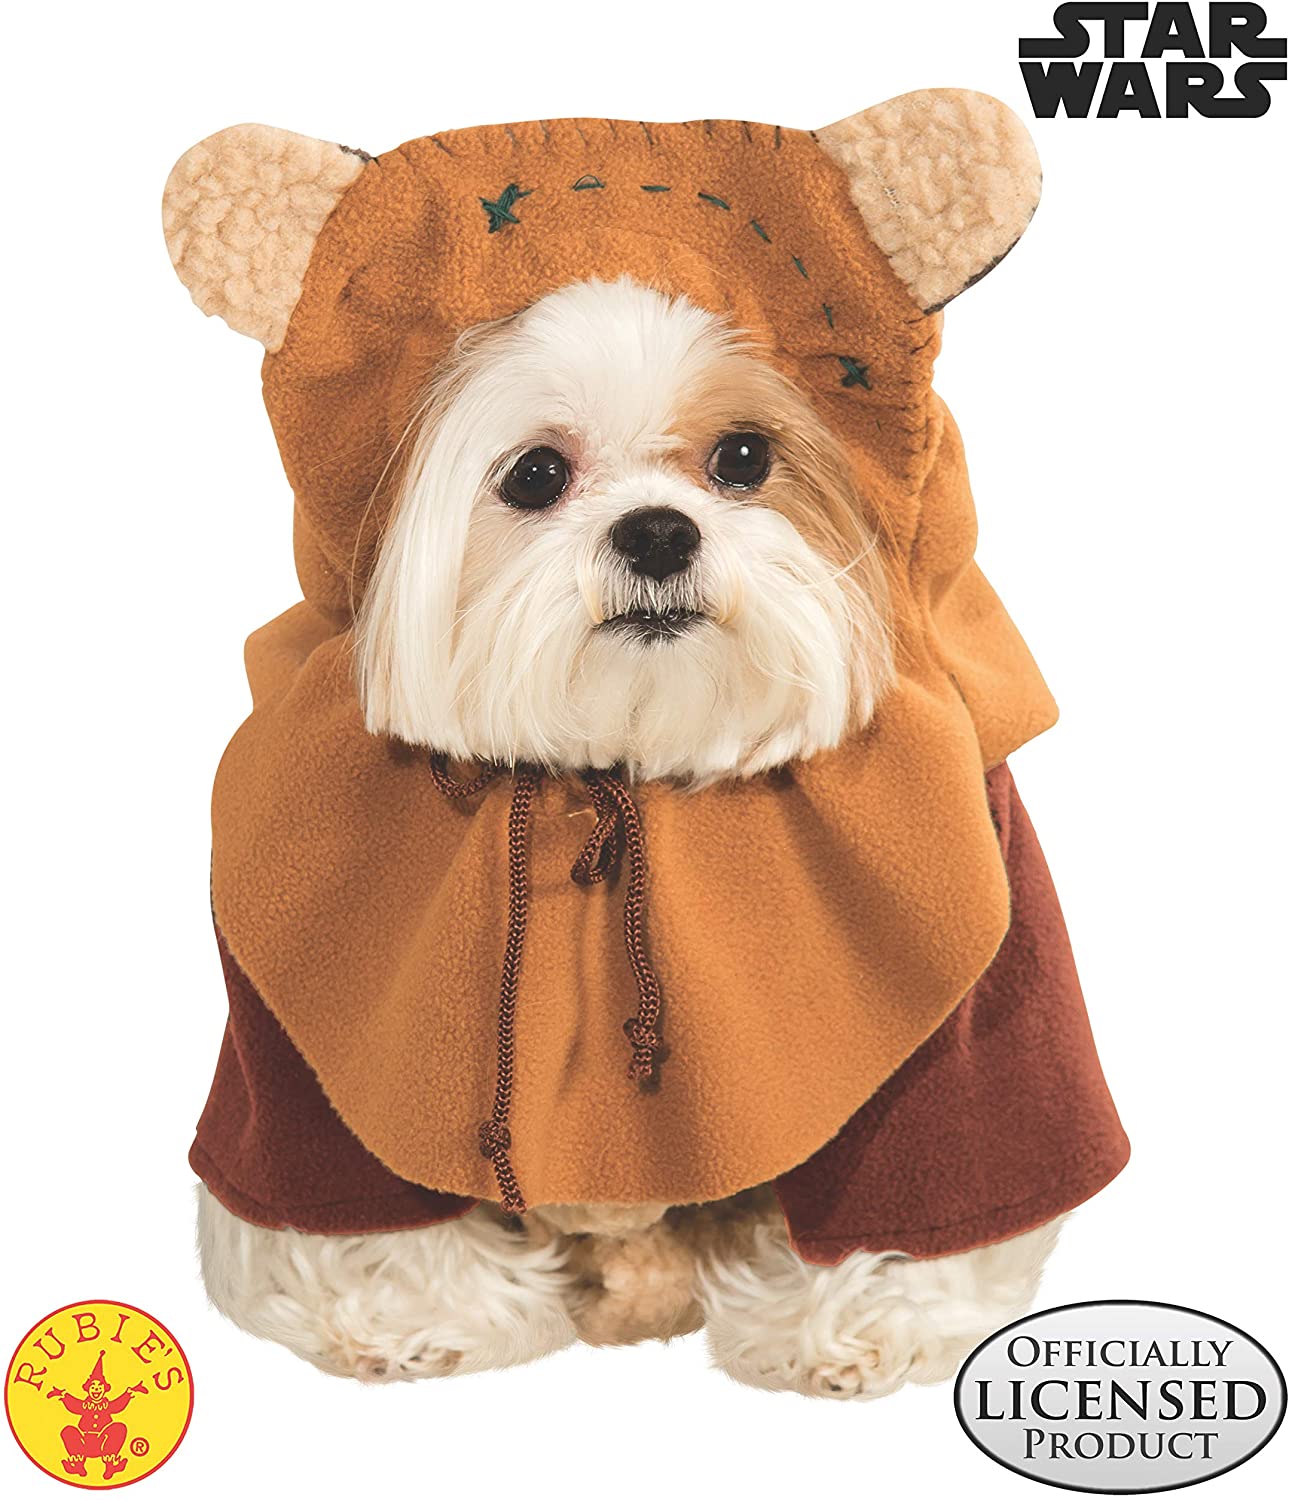  Star Wars - Disfraz de Ewok para mascota, Talla M perro (Rubie's 887854-M) 